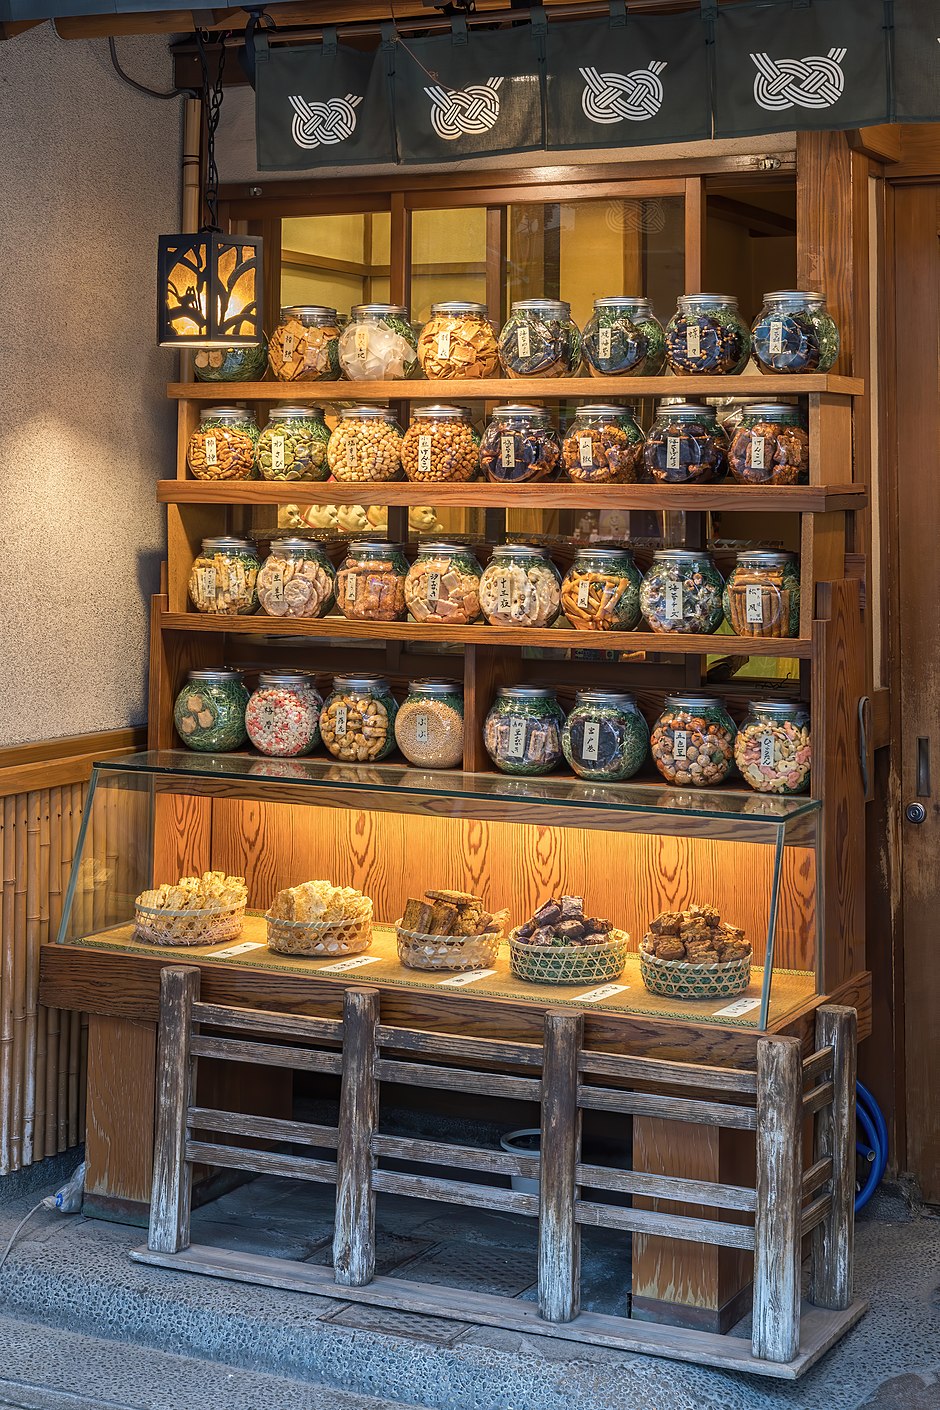 Illuminated wooden shelf with many glass jars